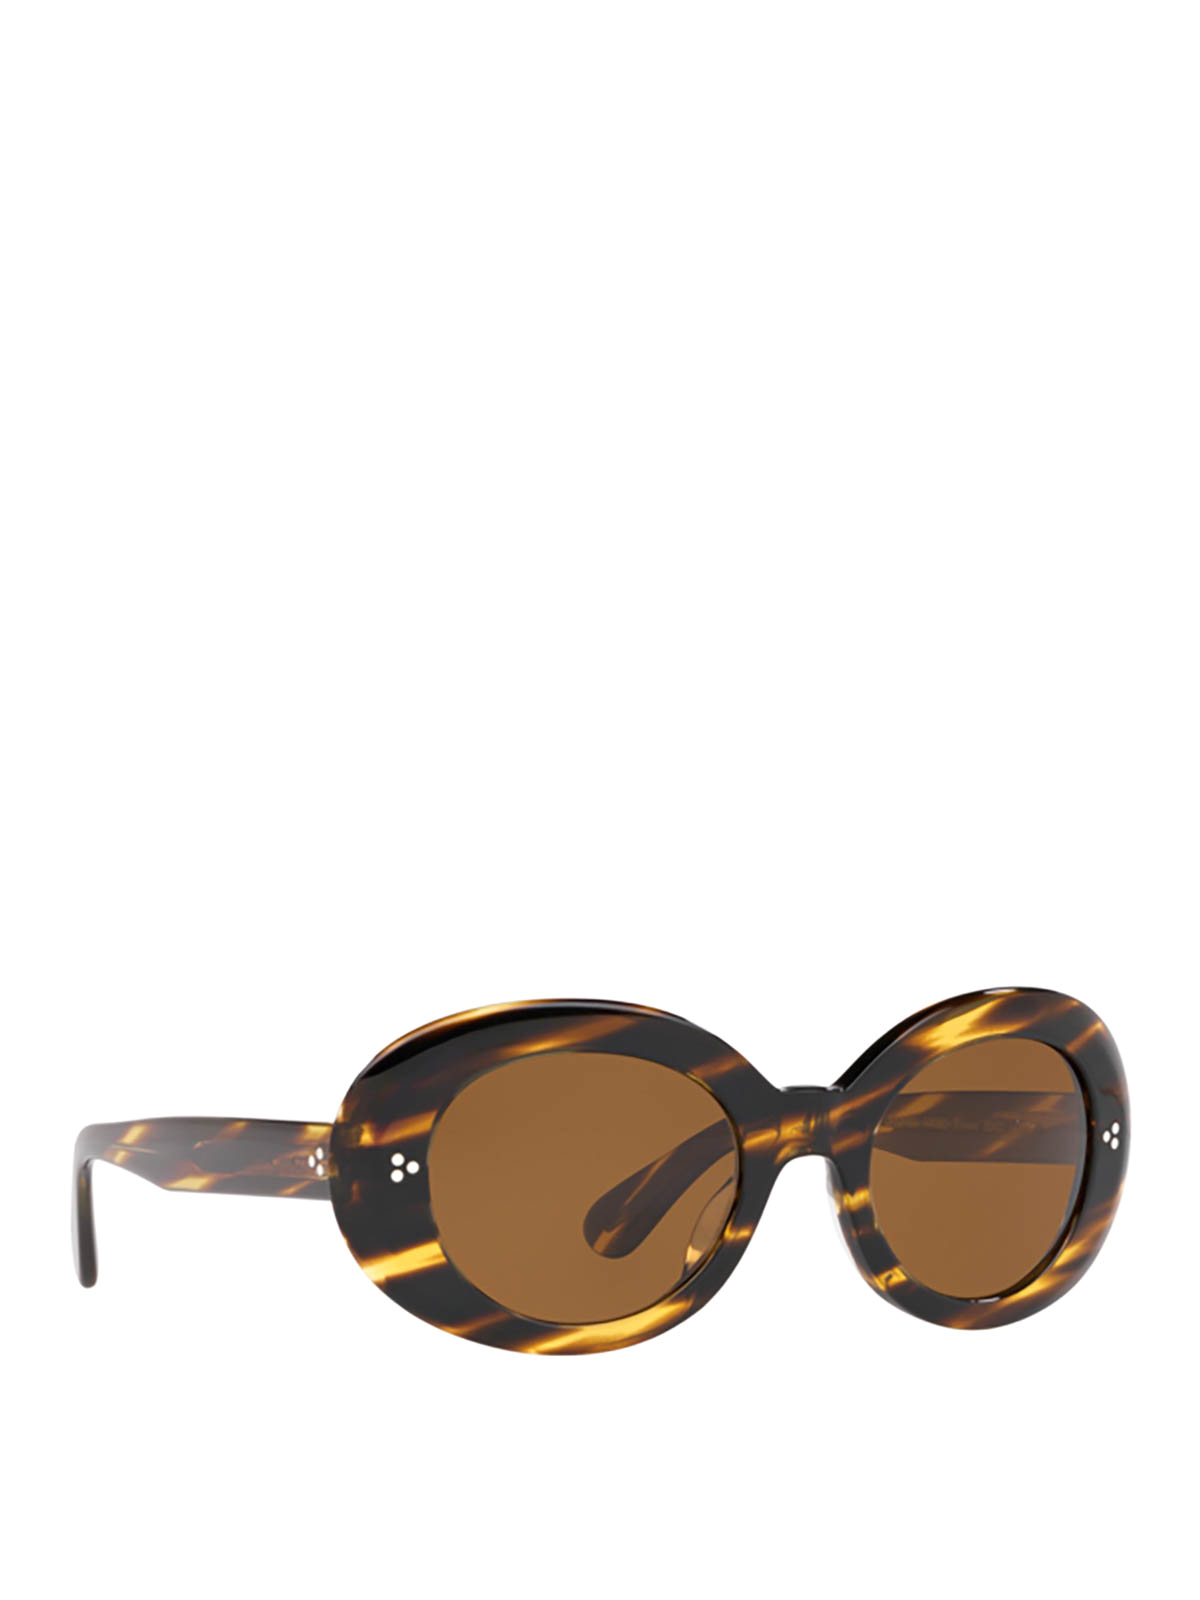 Sunglasses Oliver Peoples - Erissa oval havana sunglasses - OV5395SU100383